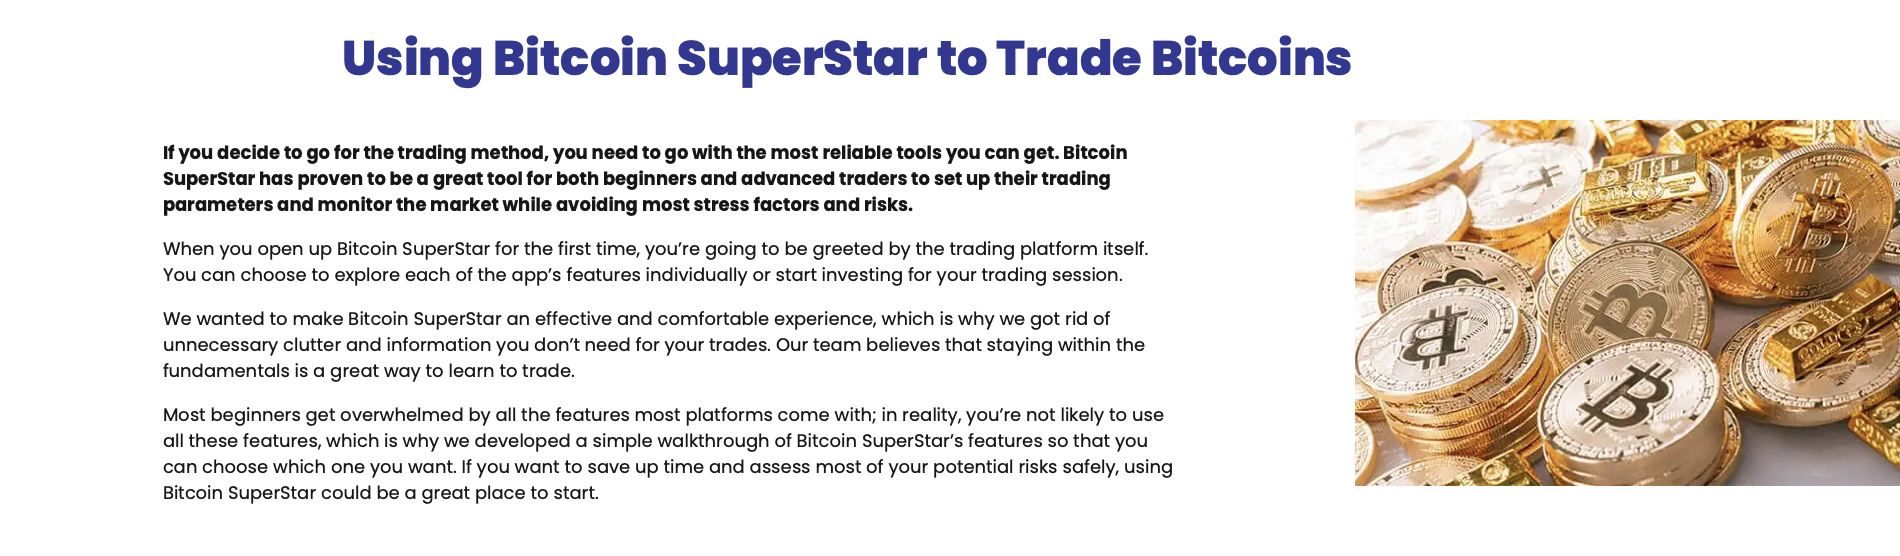 Menggunakan Bitcoin Superstar